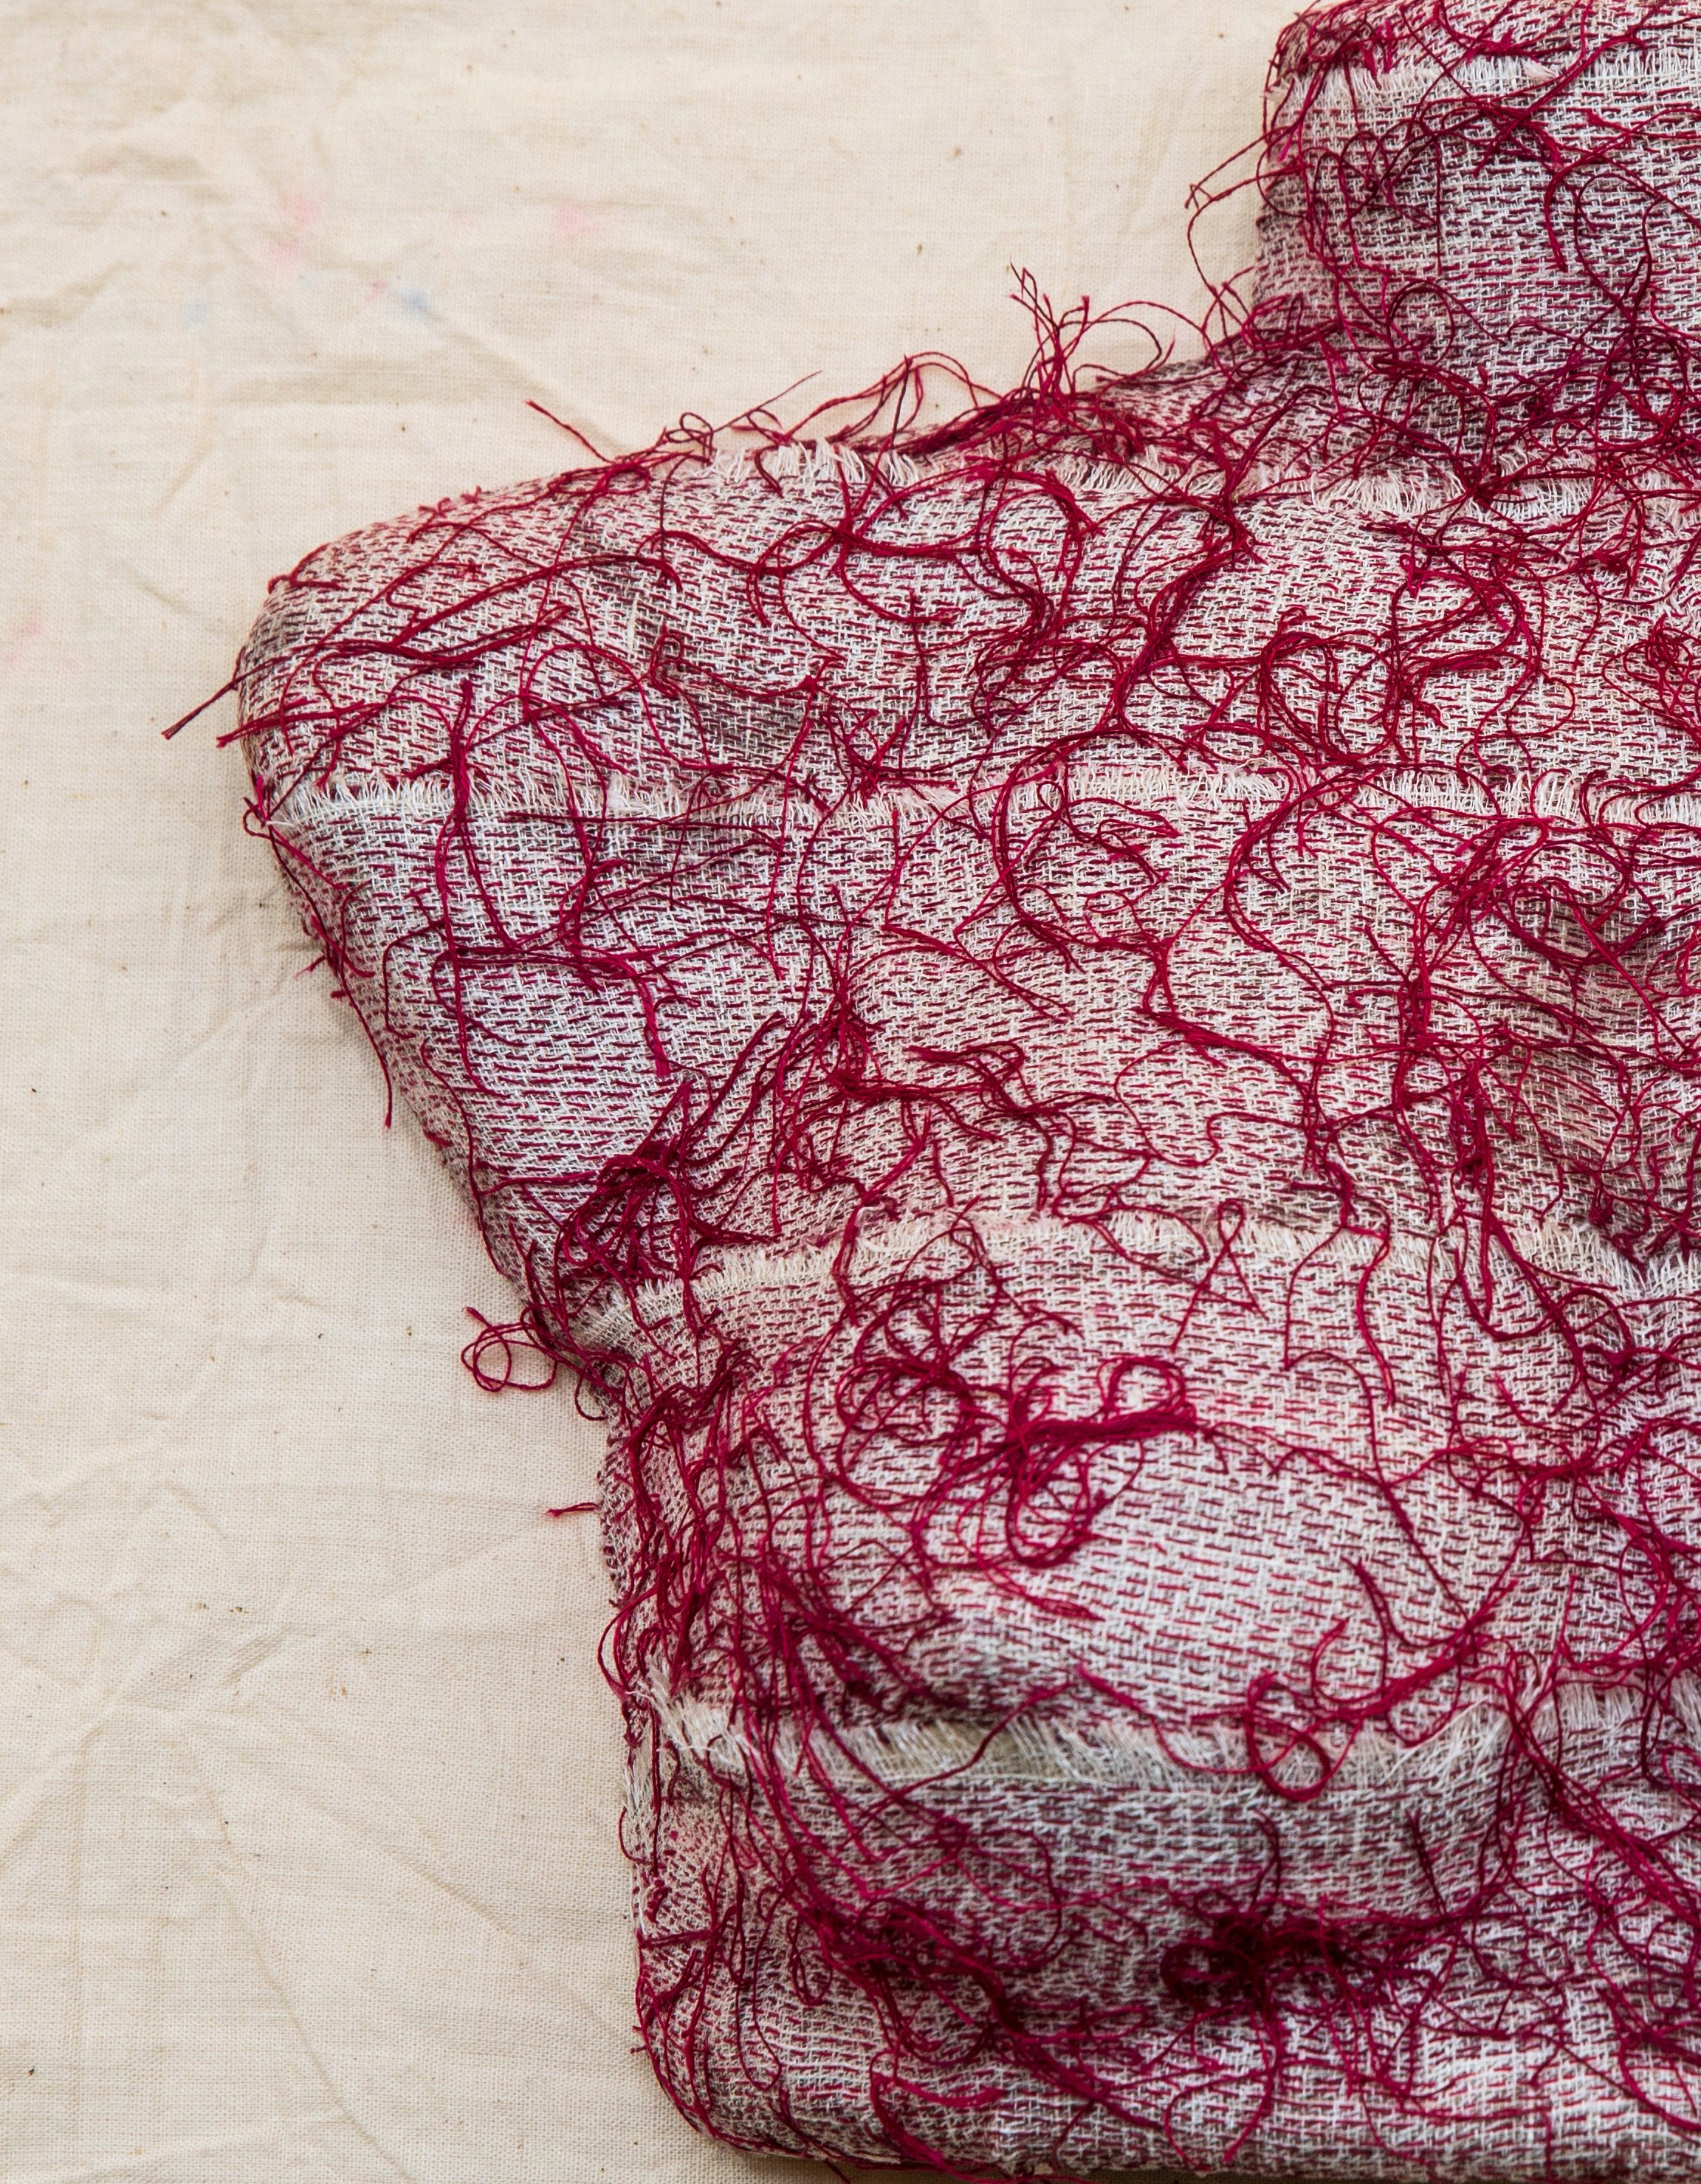  Entangled Emotions, 2022, Plastic bust, fabric, red thread, 49 x 39 x 12 cm.  